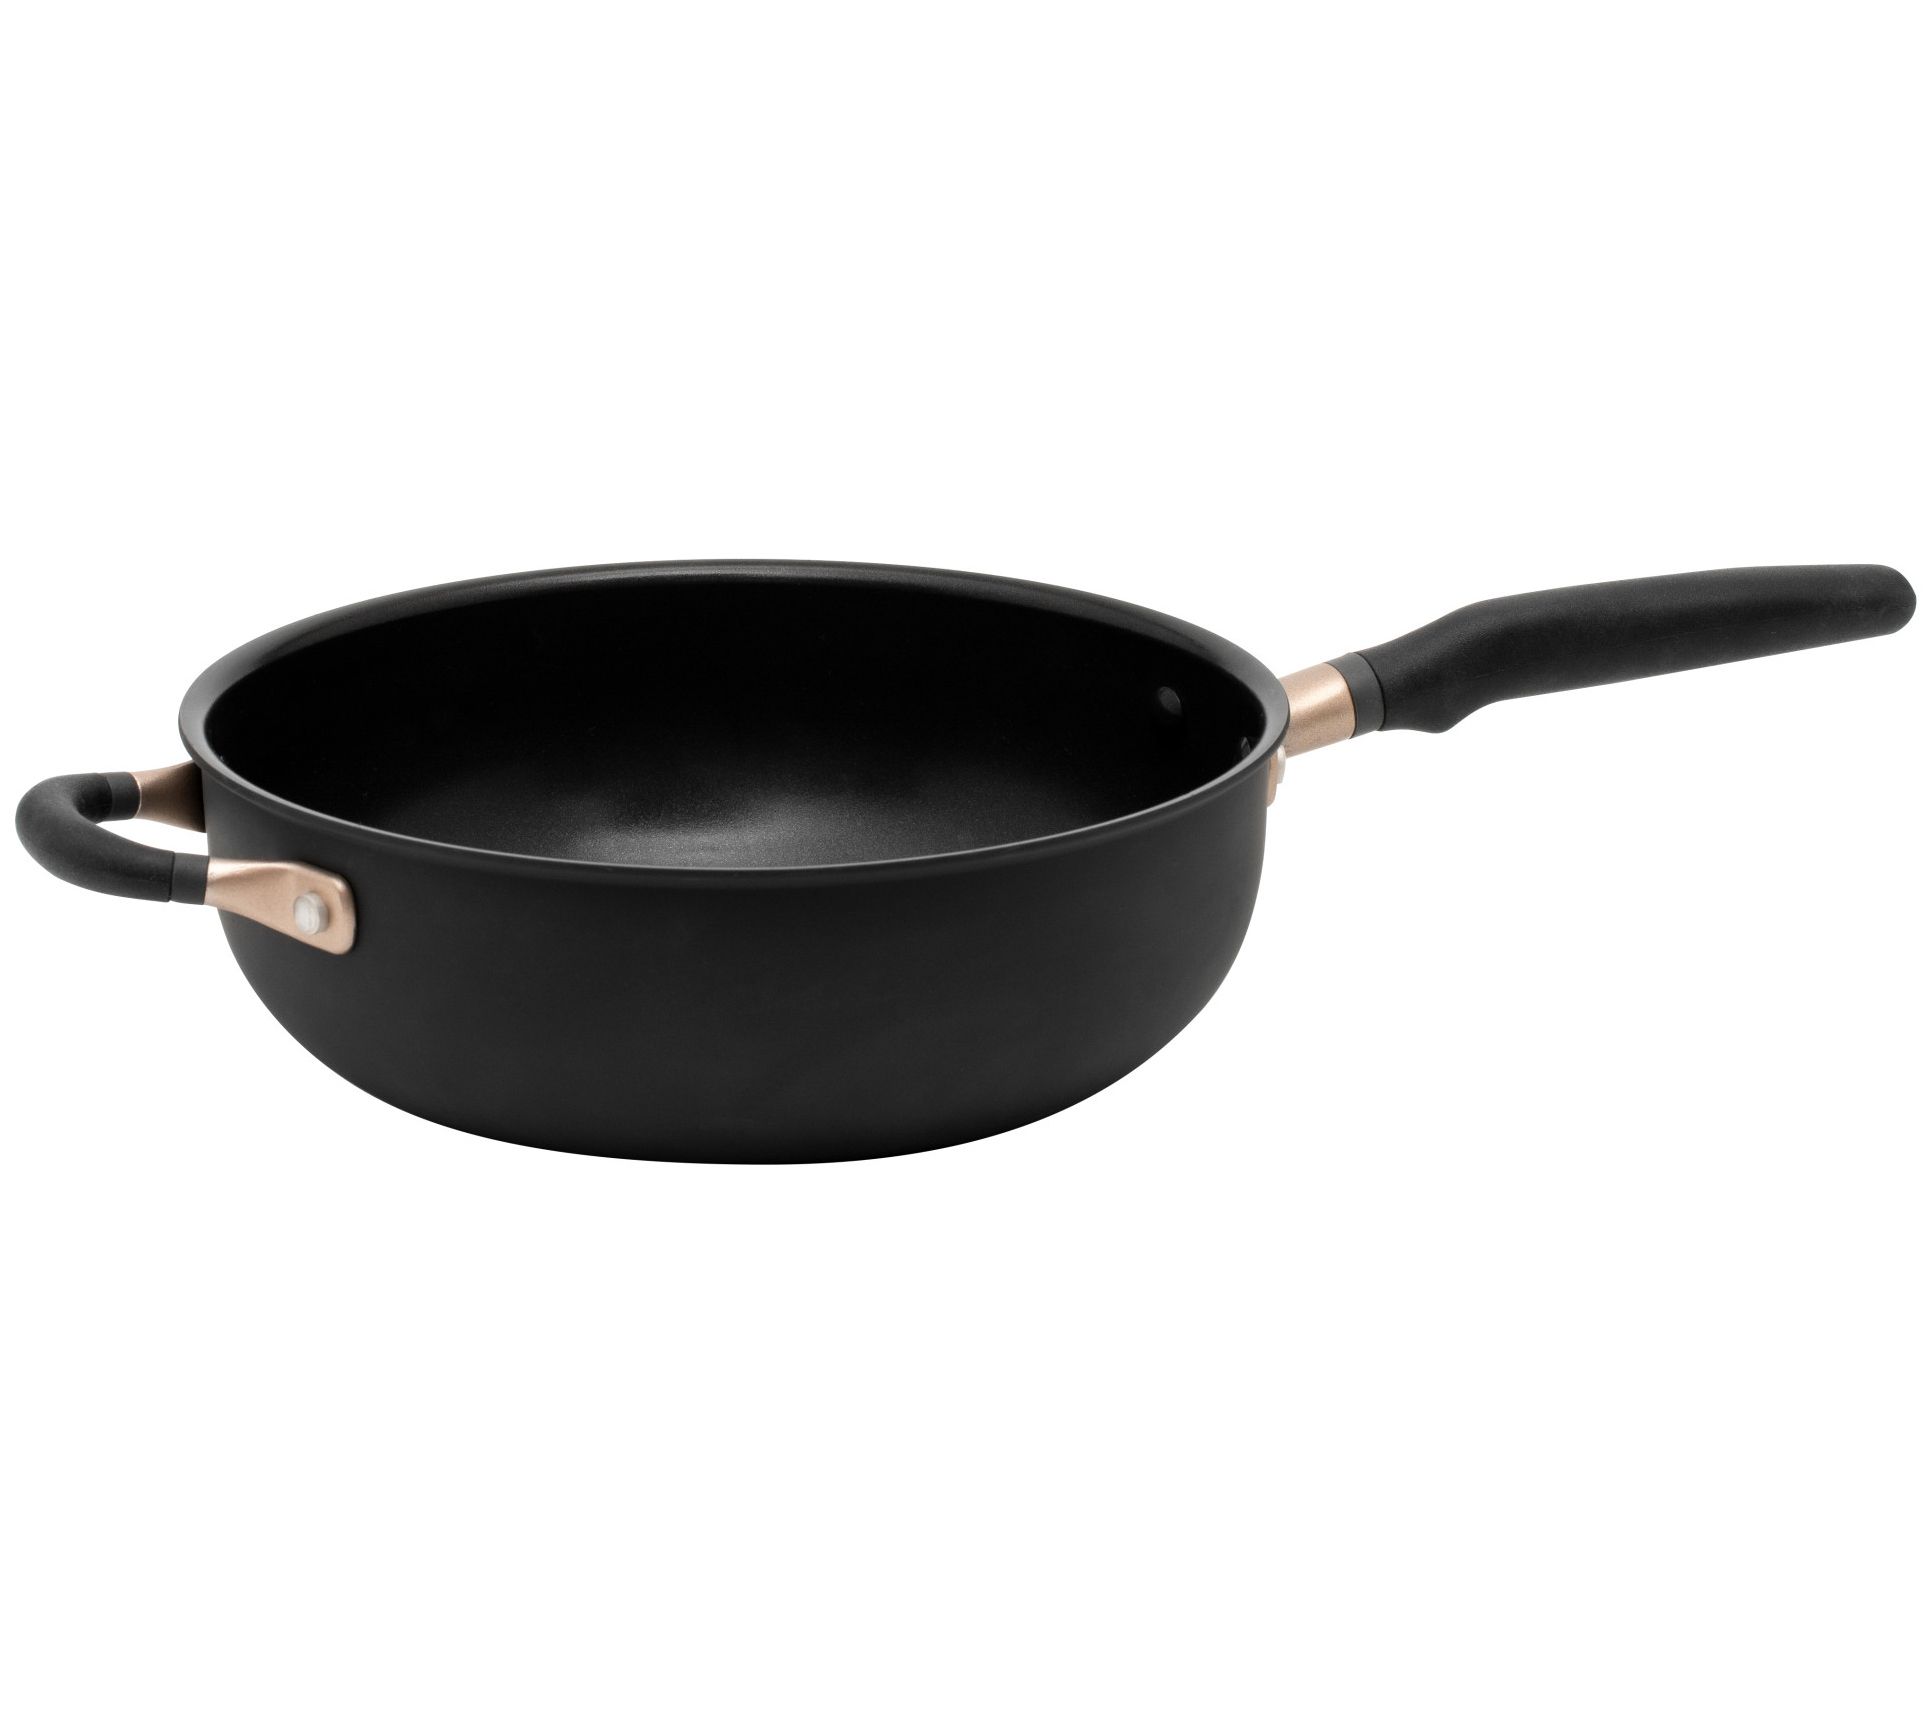 Meyer Accent Series 11 Ultra Durable Nonstick Frying Pan 